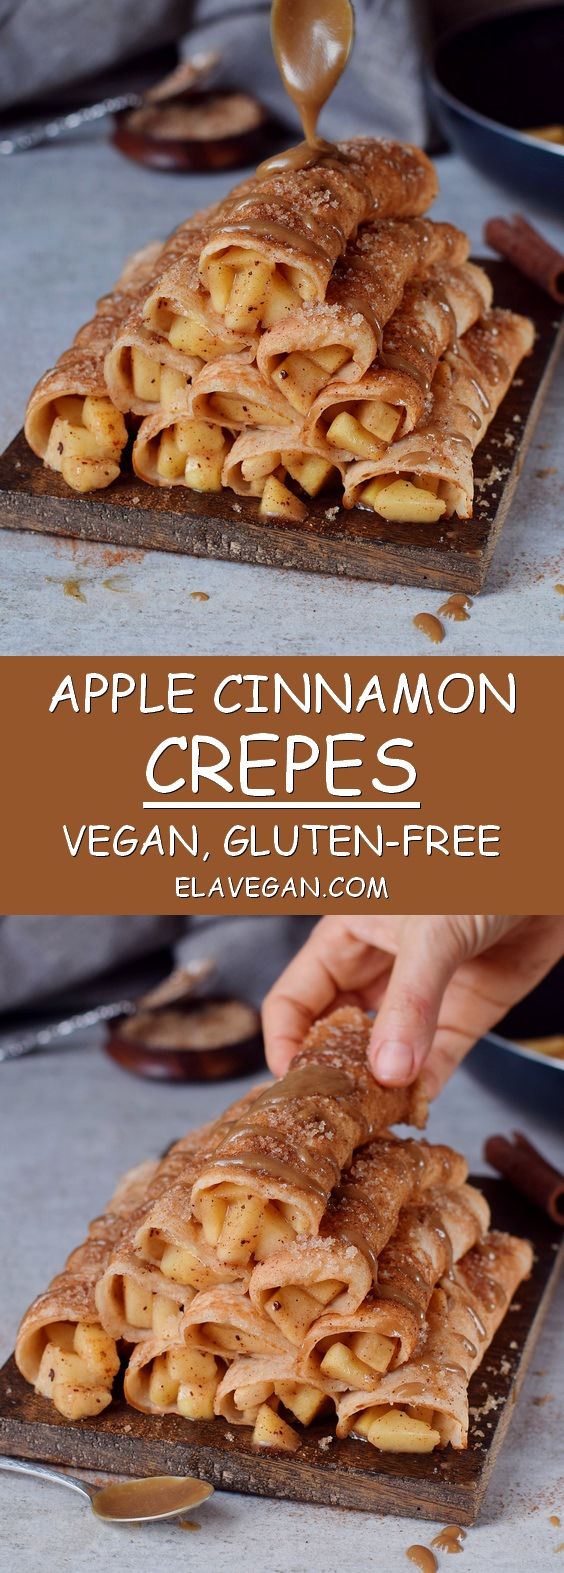 APPLE CINNAMON CREPES | VEGAN, GLUTEN-FREE RECIPE #apple #cinnamon #crepes #vegan #veganrecipes #glutenfree